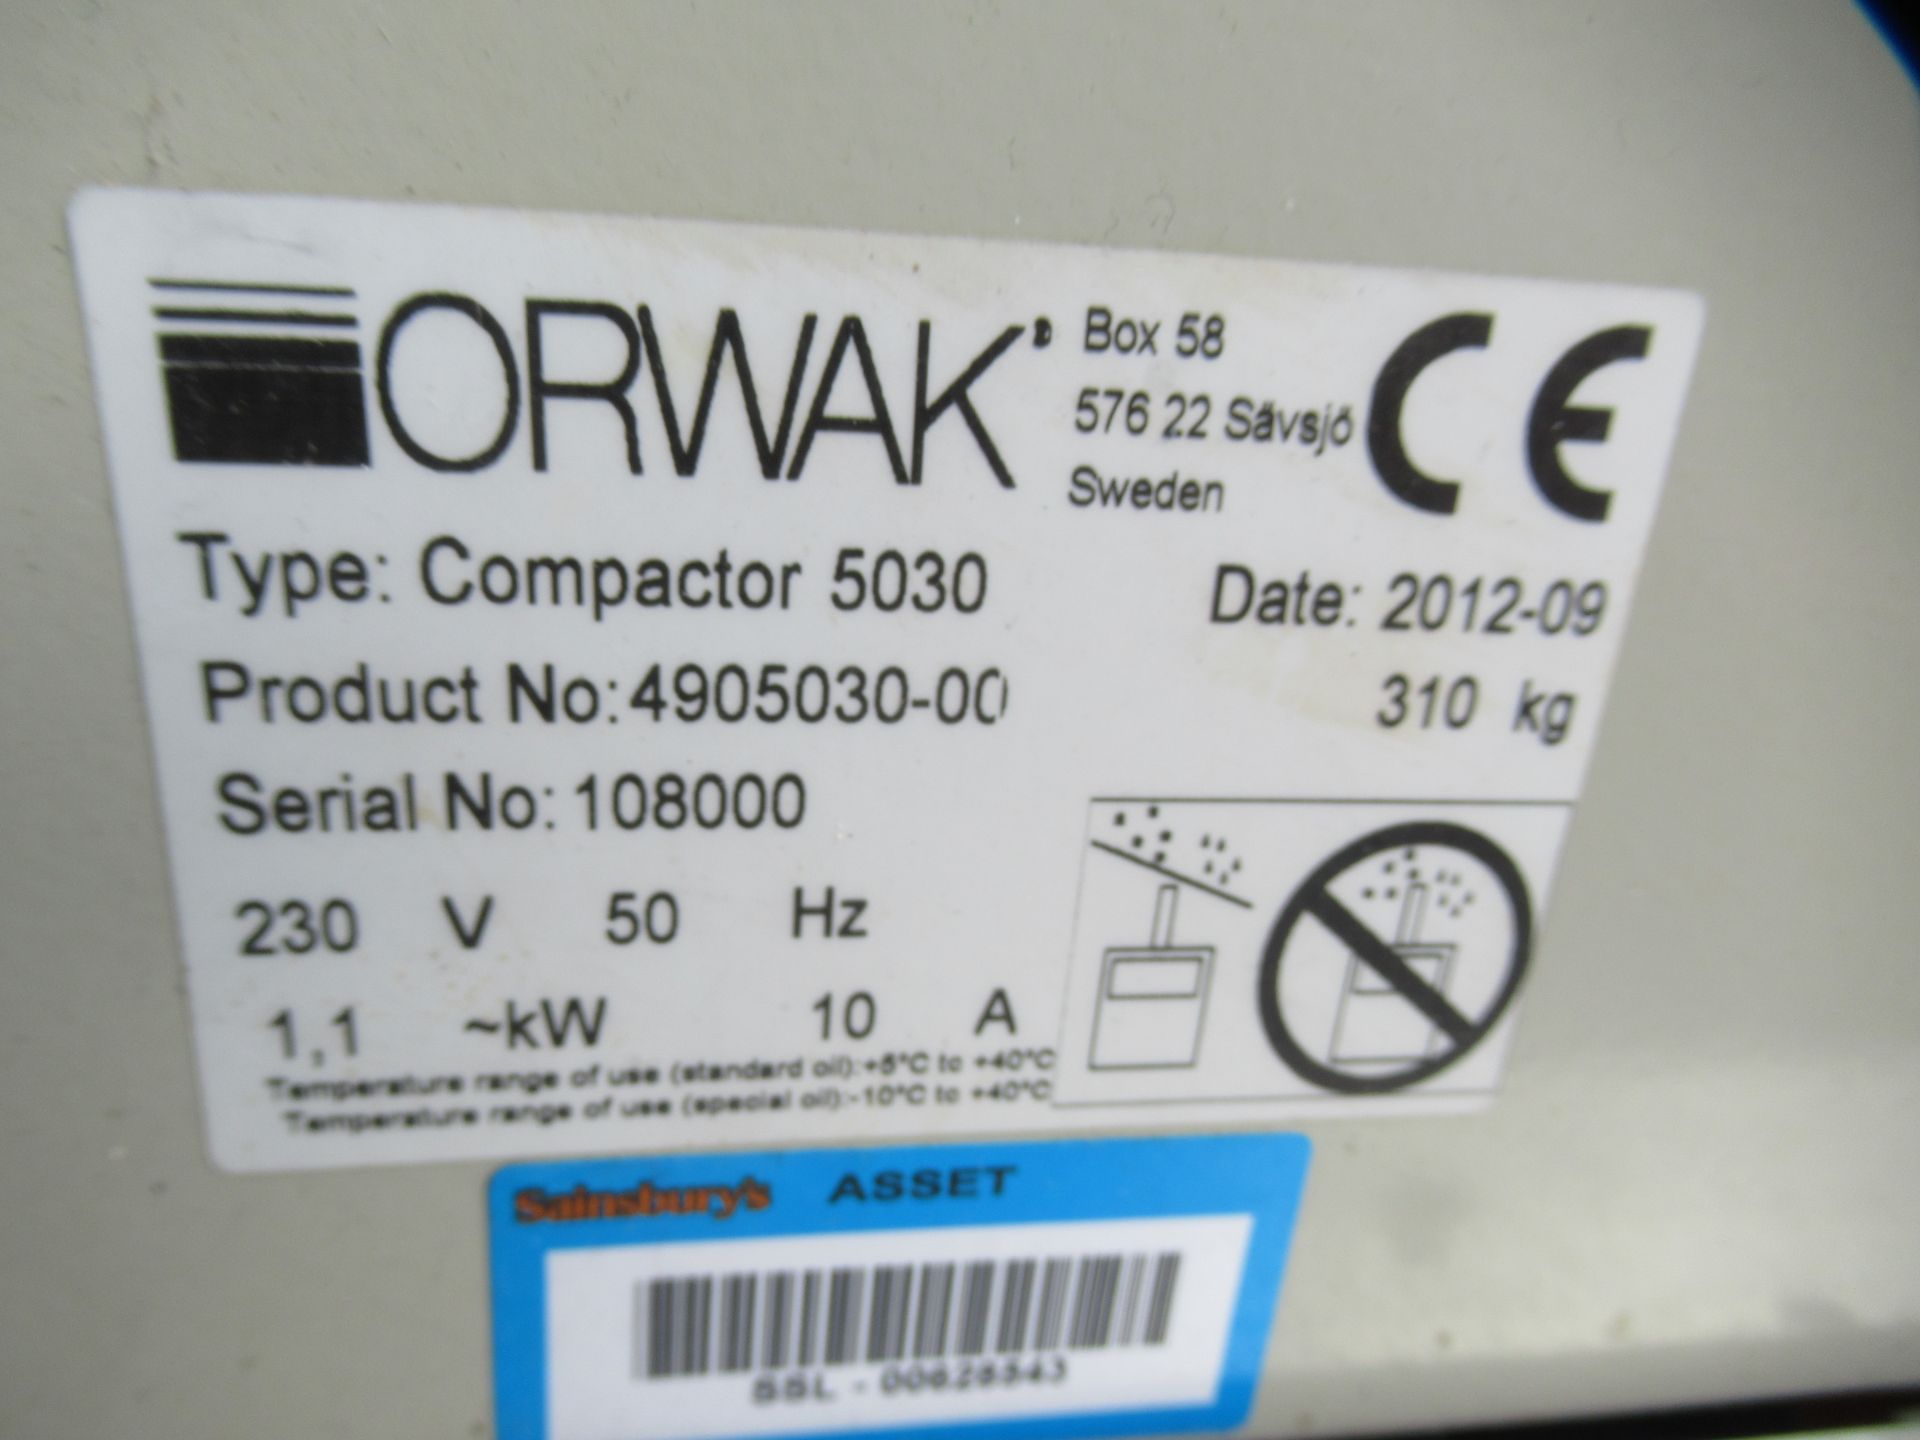 Orwak 5030B Compactor - Image 5 of 5